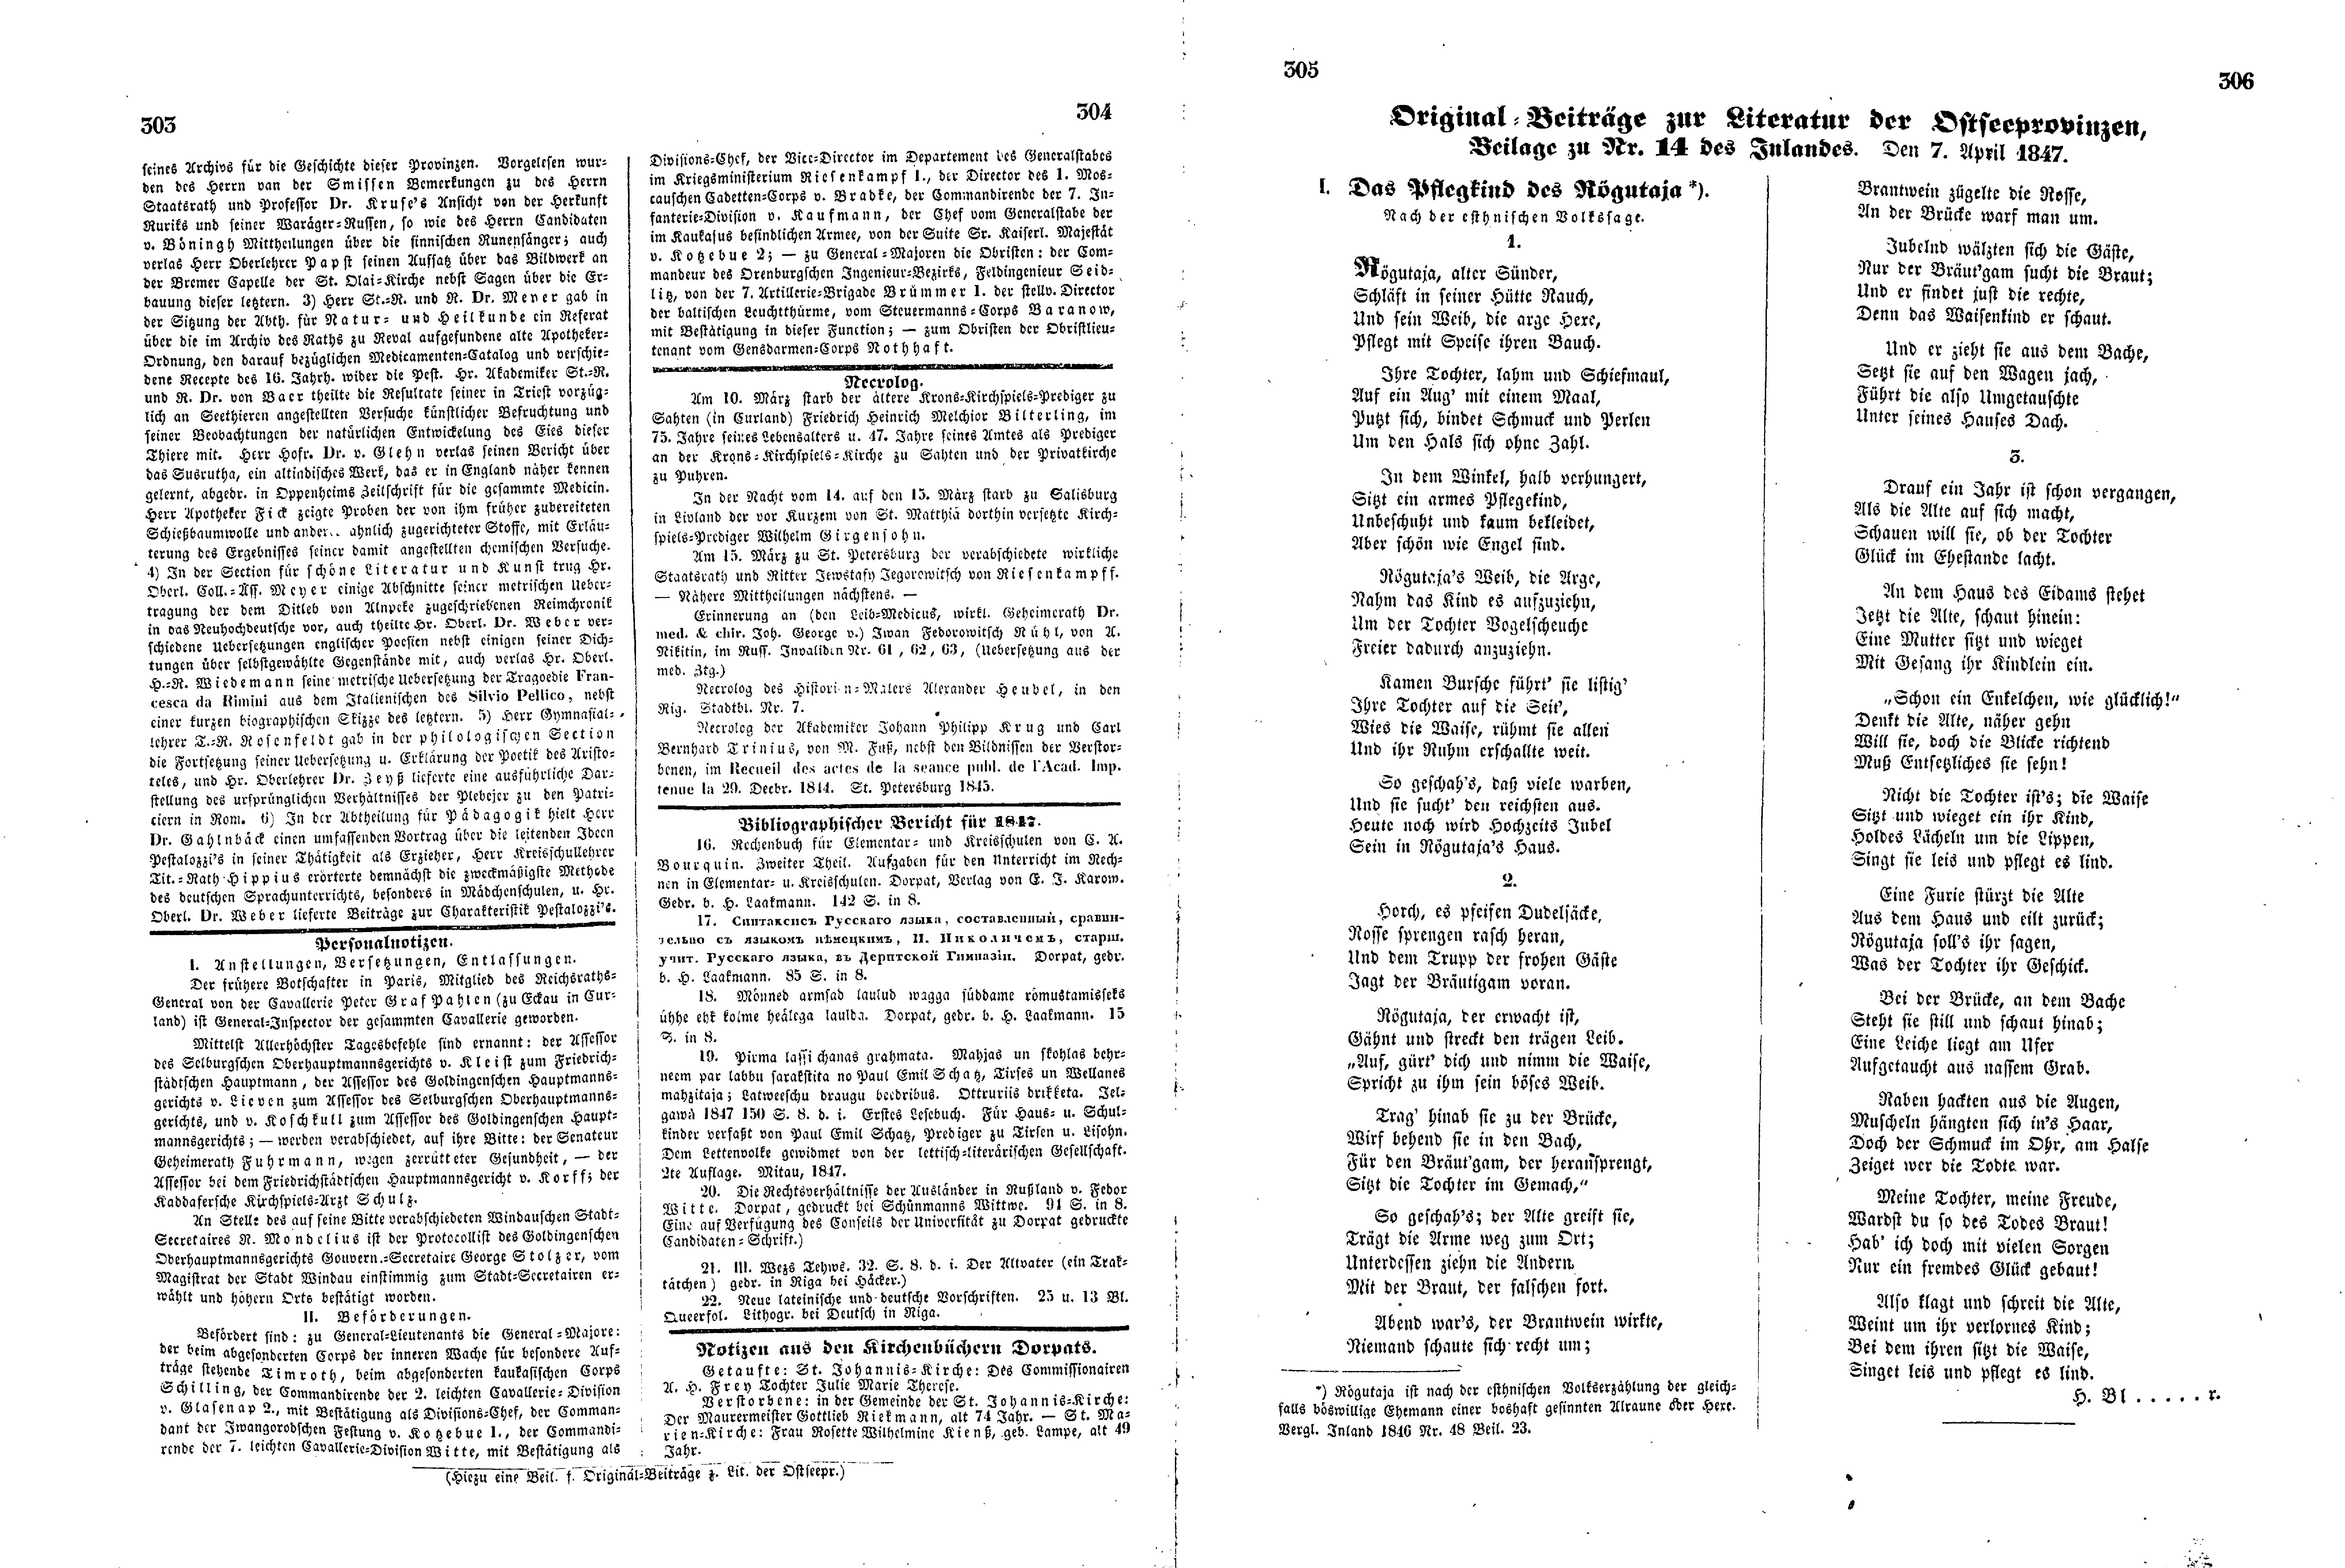 Das Inland [12] (1847) | 81. (303-306) Main body of text